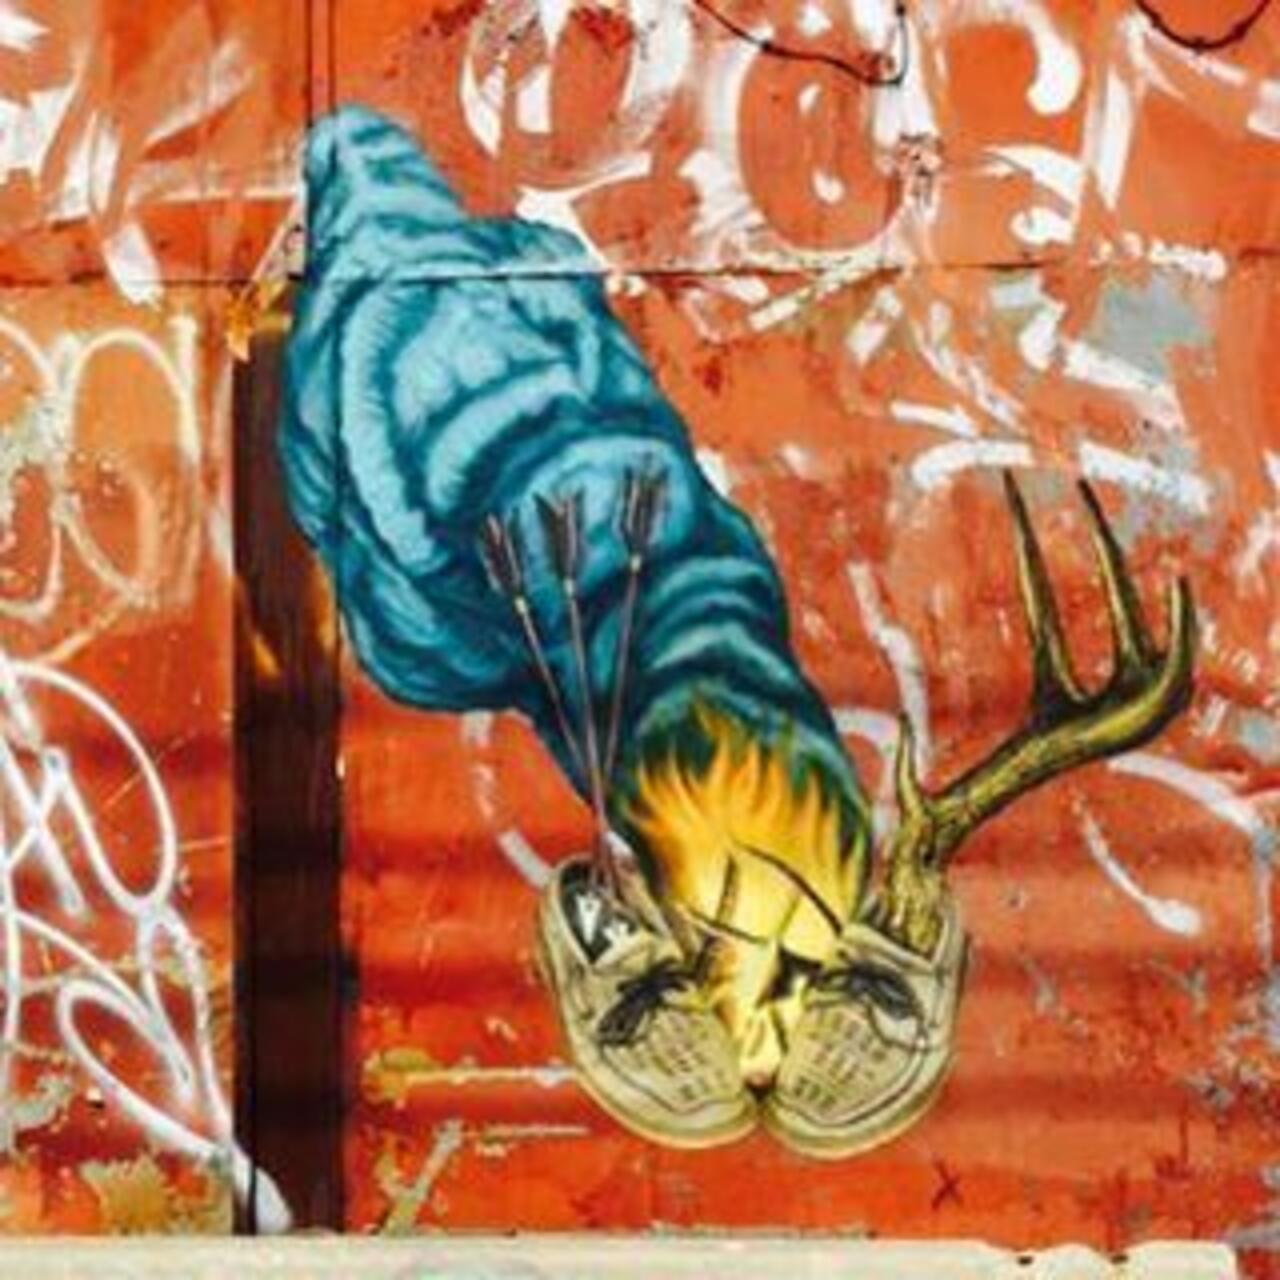 Symbolism #streetart #painting #mural #walls #graffiti #redhook #brooklyn #nyc #newyorkcity #nycstreetart #streetar… http://t.co/XOVDf16Zll